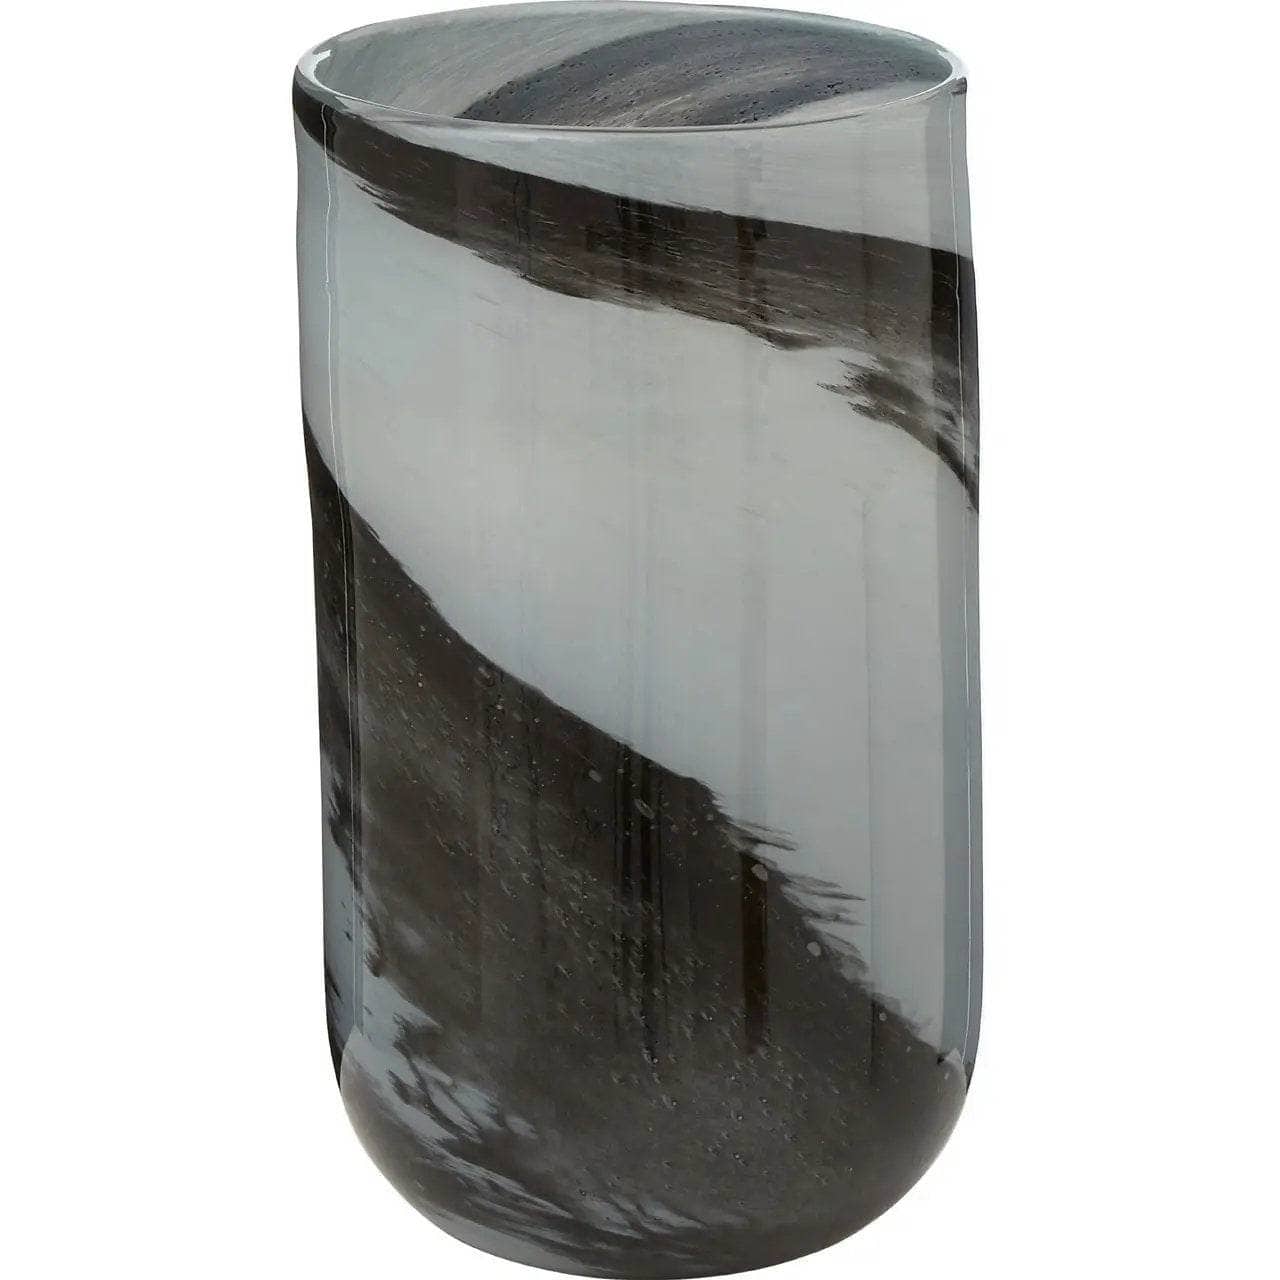 Homeware  -  Carra Small Brushstroke Vase - Black & Grey  -  60003489